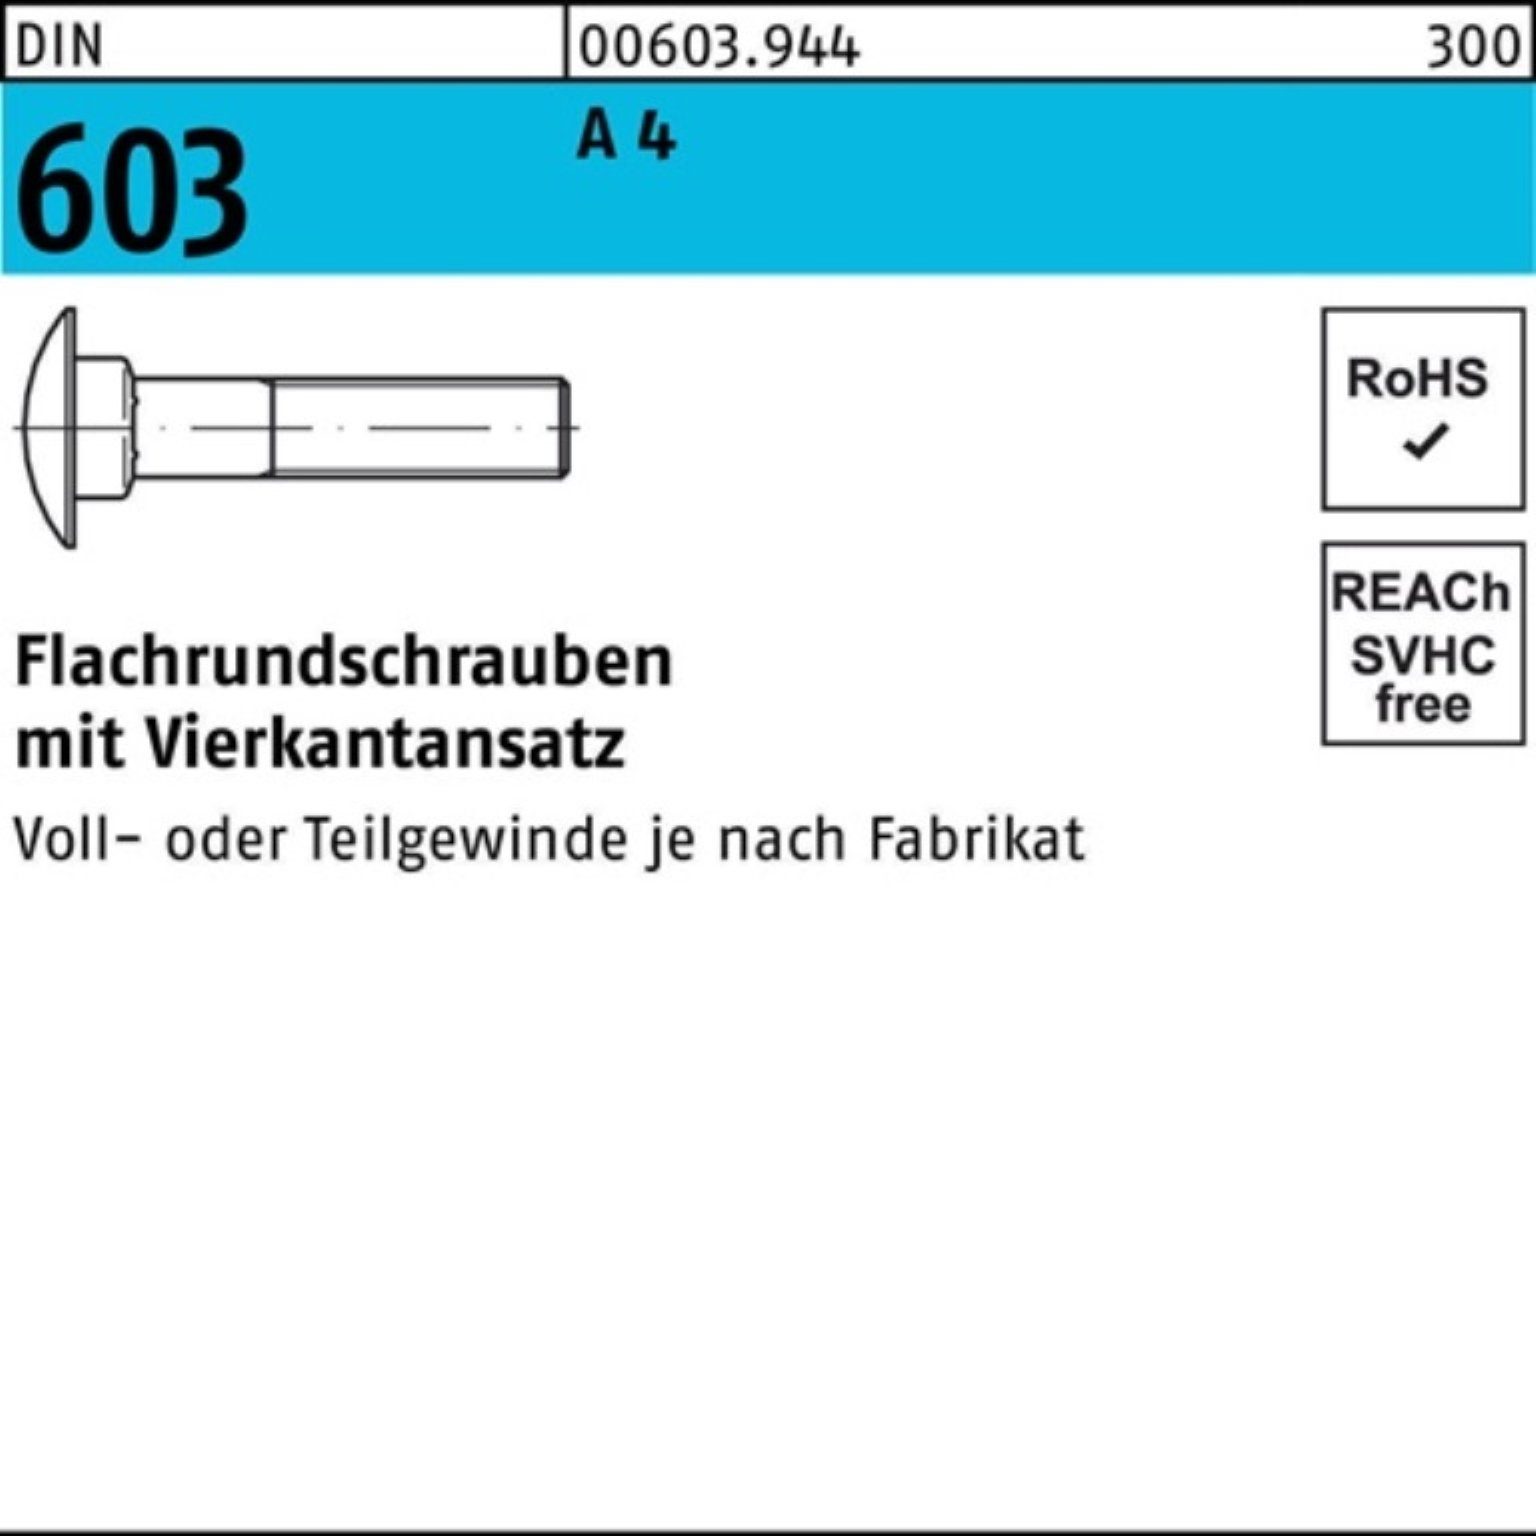 Reyher Schraube 100er Pack Flachrundschraube DIN 603 Vierkantansatz M10x 55 A 4 10 St